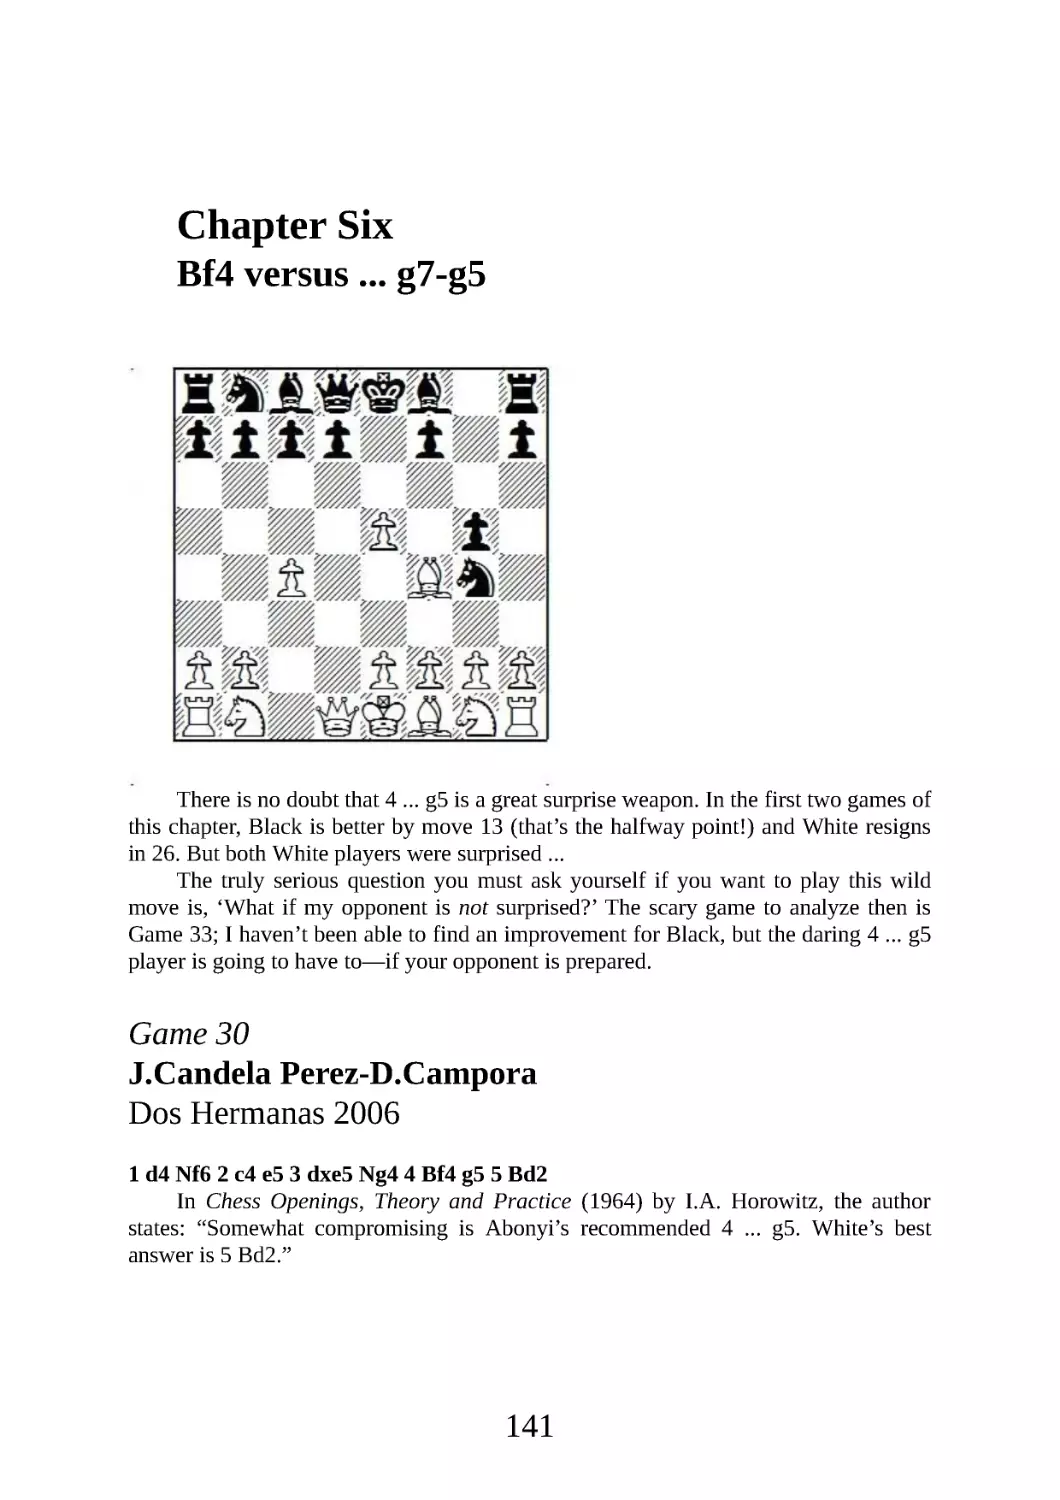 6 Bf4 vs. ... g7-g5
Candela Perez.J-Campora.D, Dos Hermanas 2006